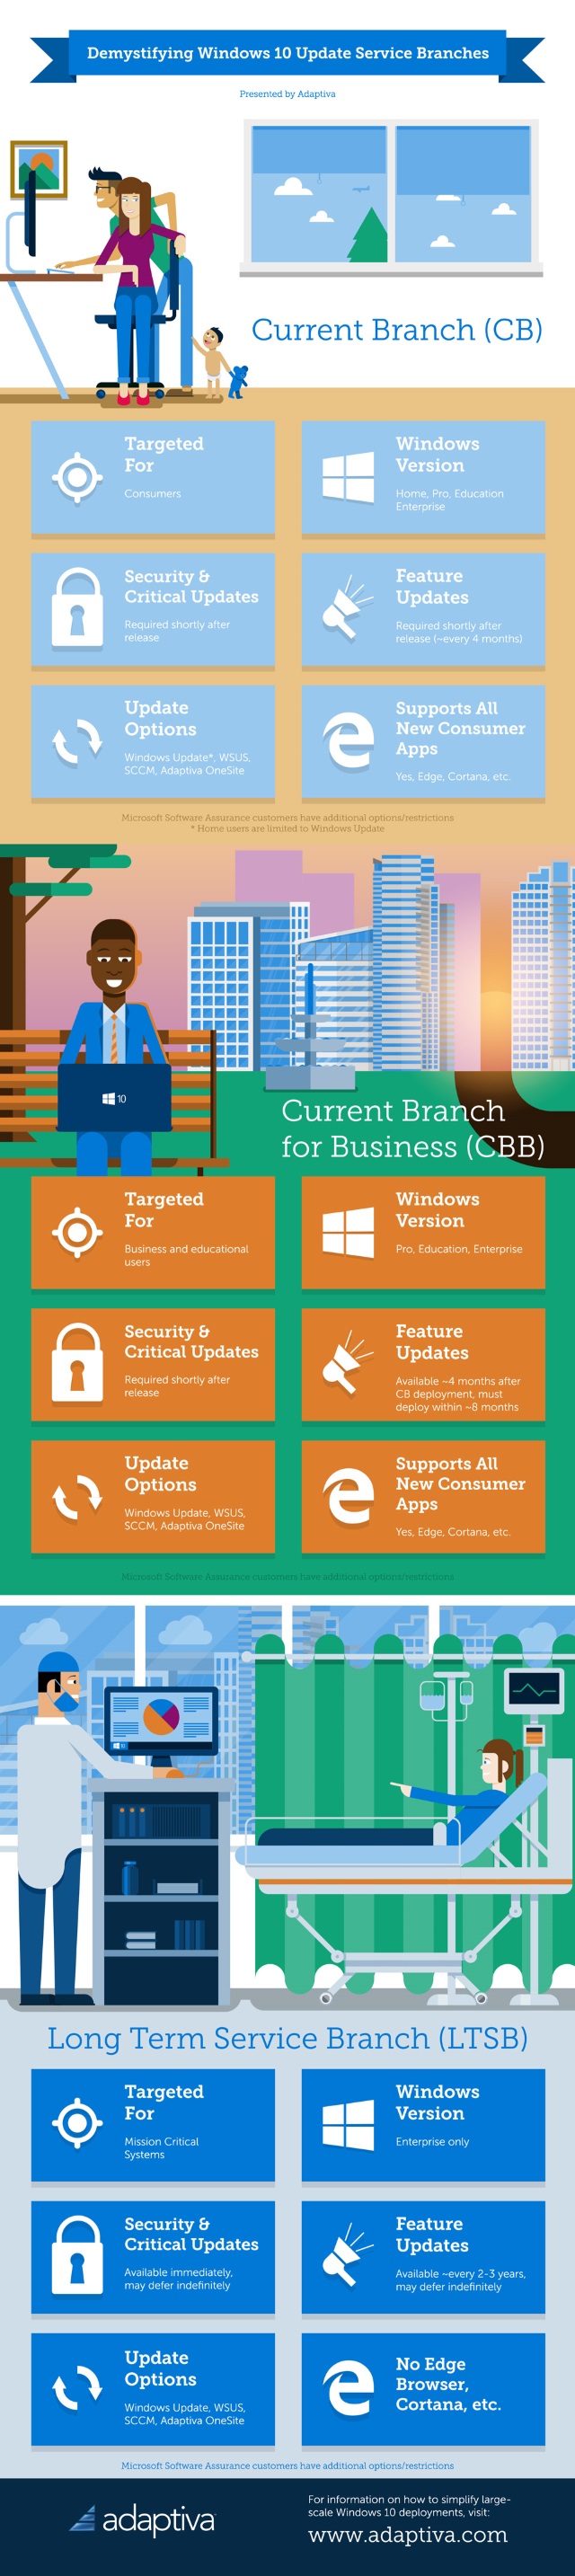 Windows 10 service infographic